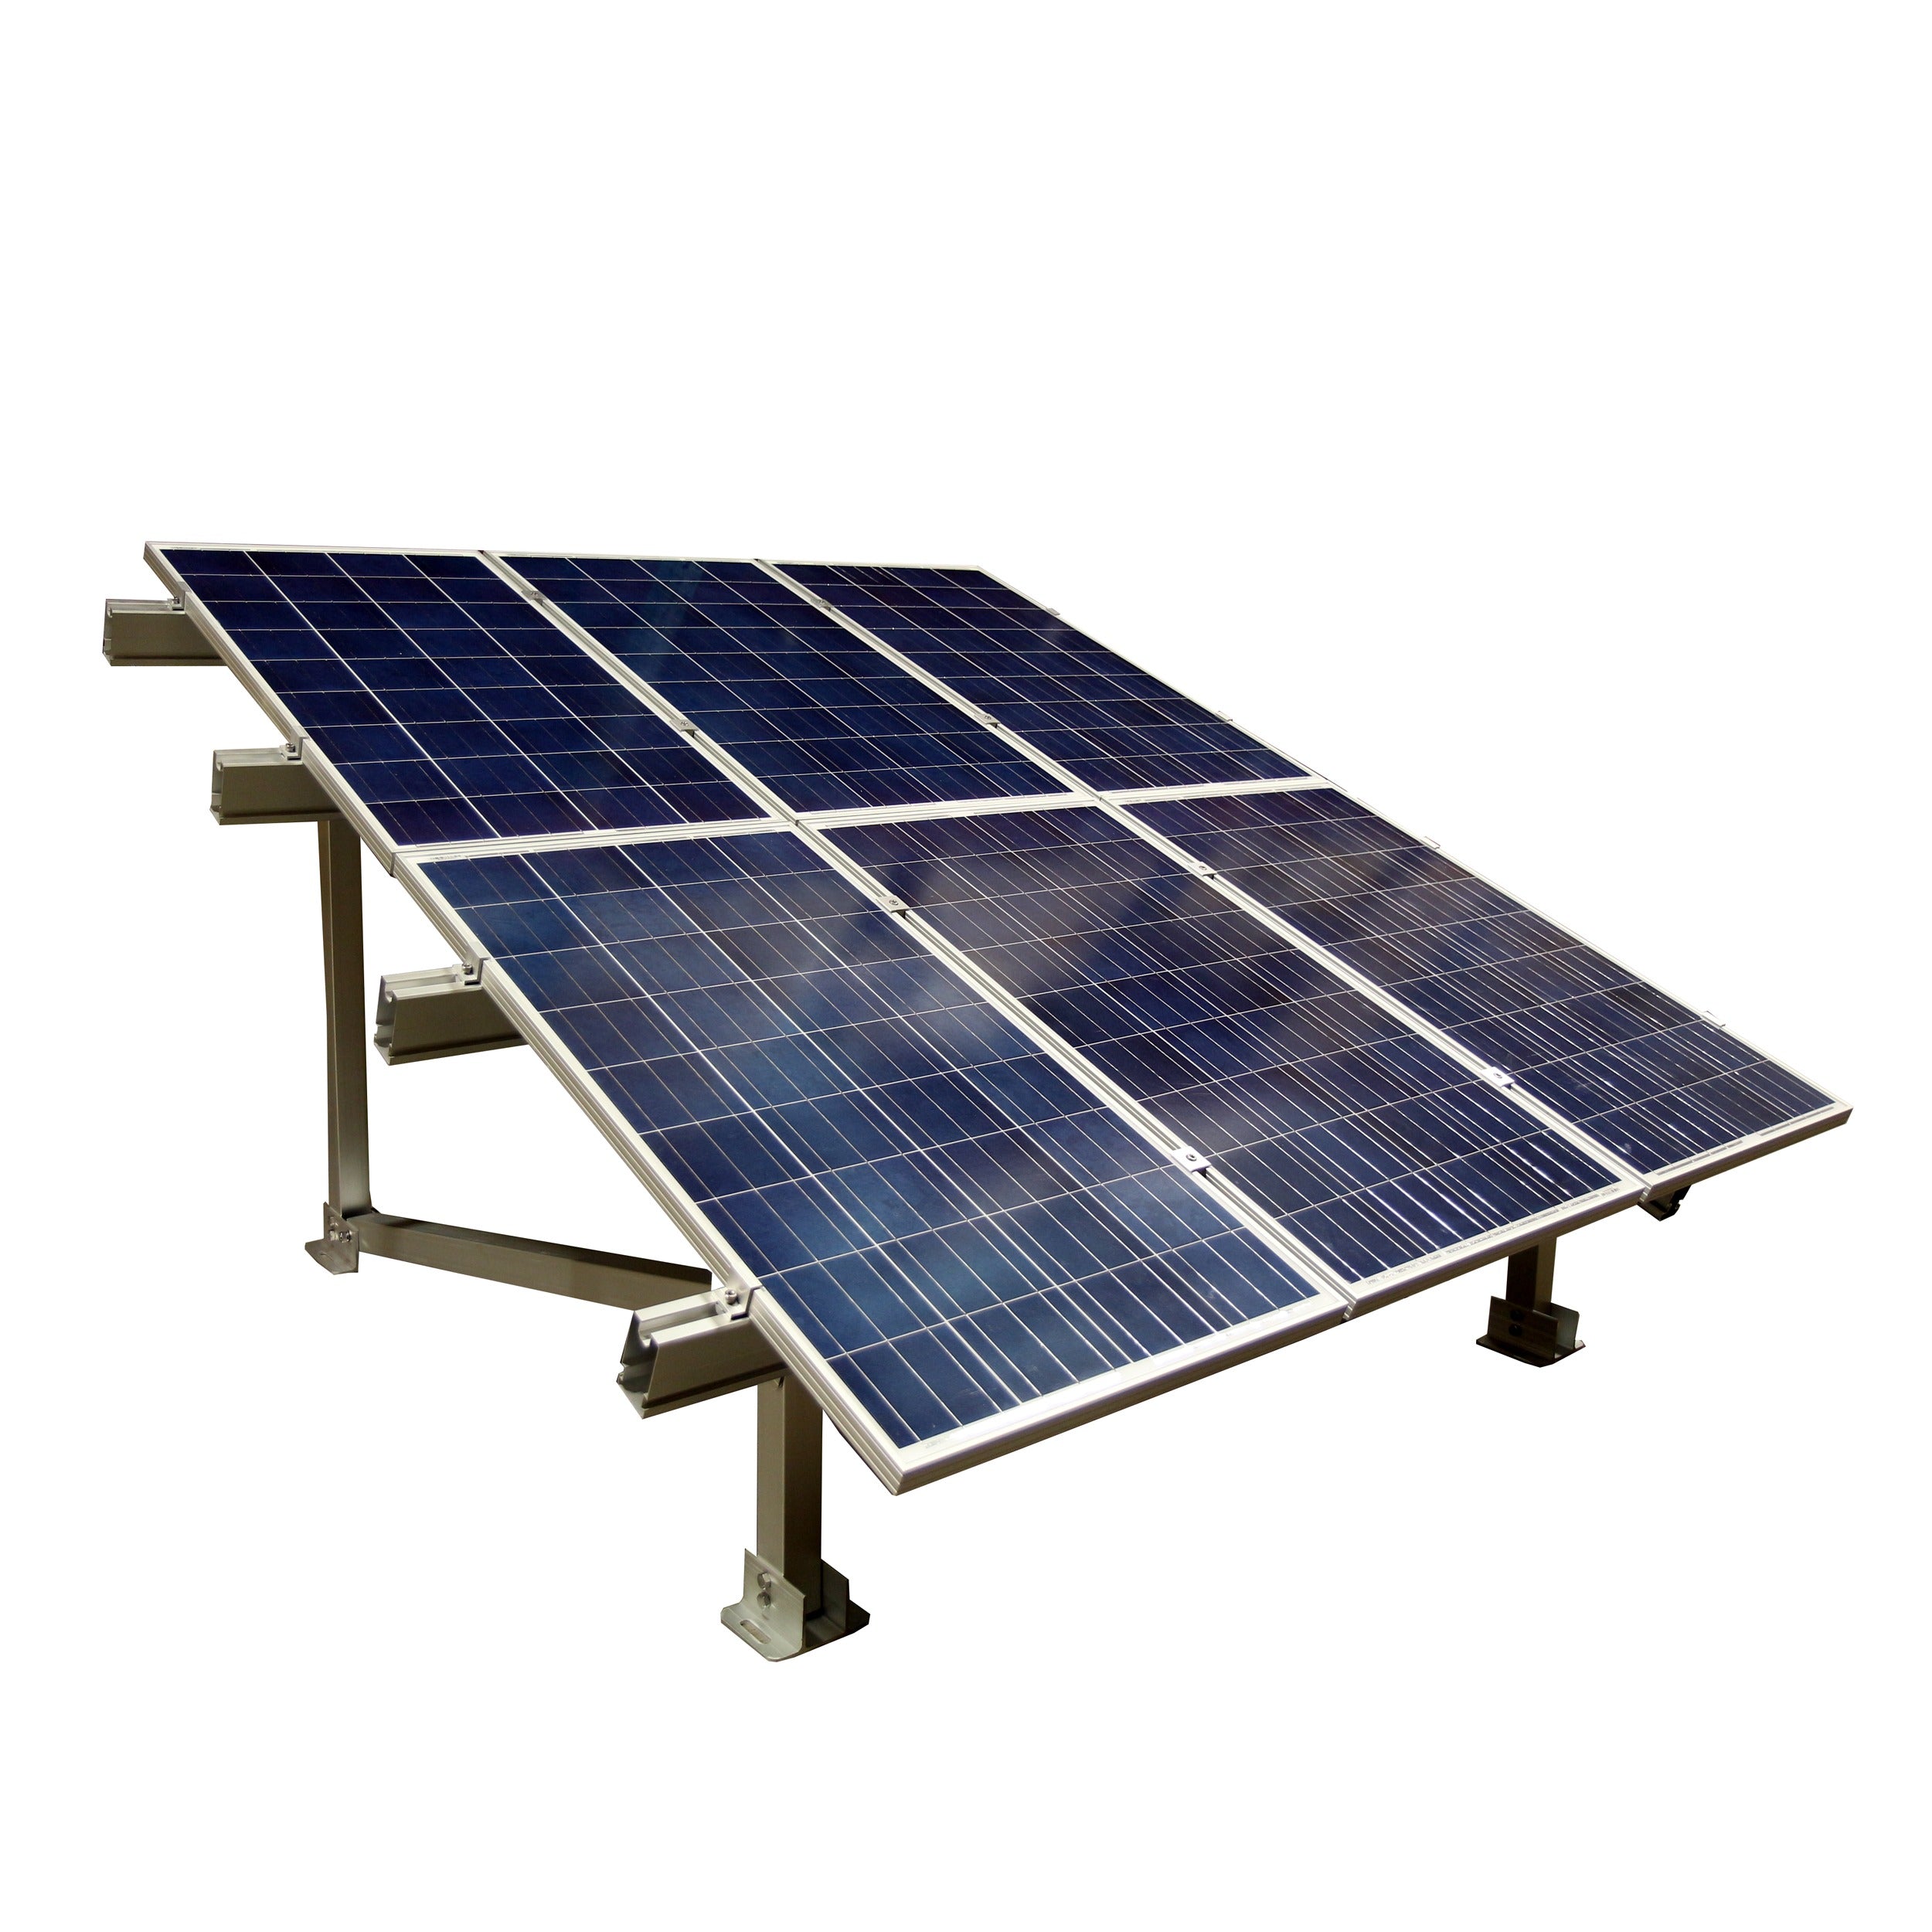 AIMS Power Solar Rack Ground Mount for 120-170 Watt Solar Panels - Fits 6